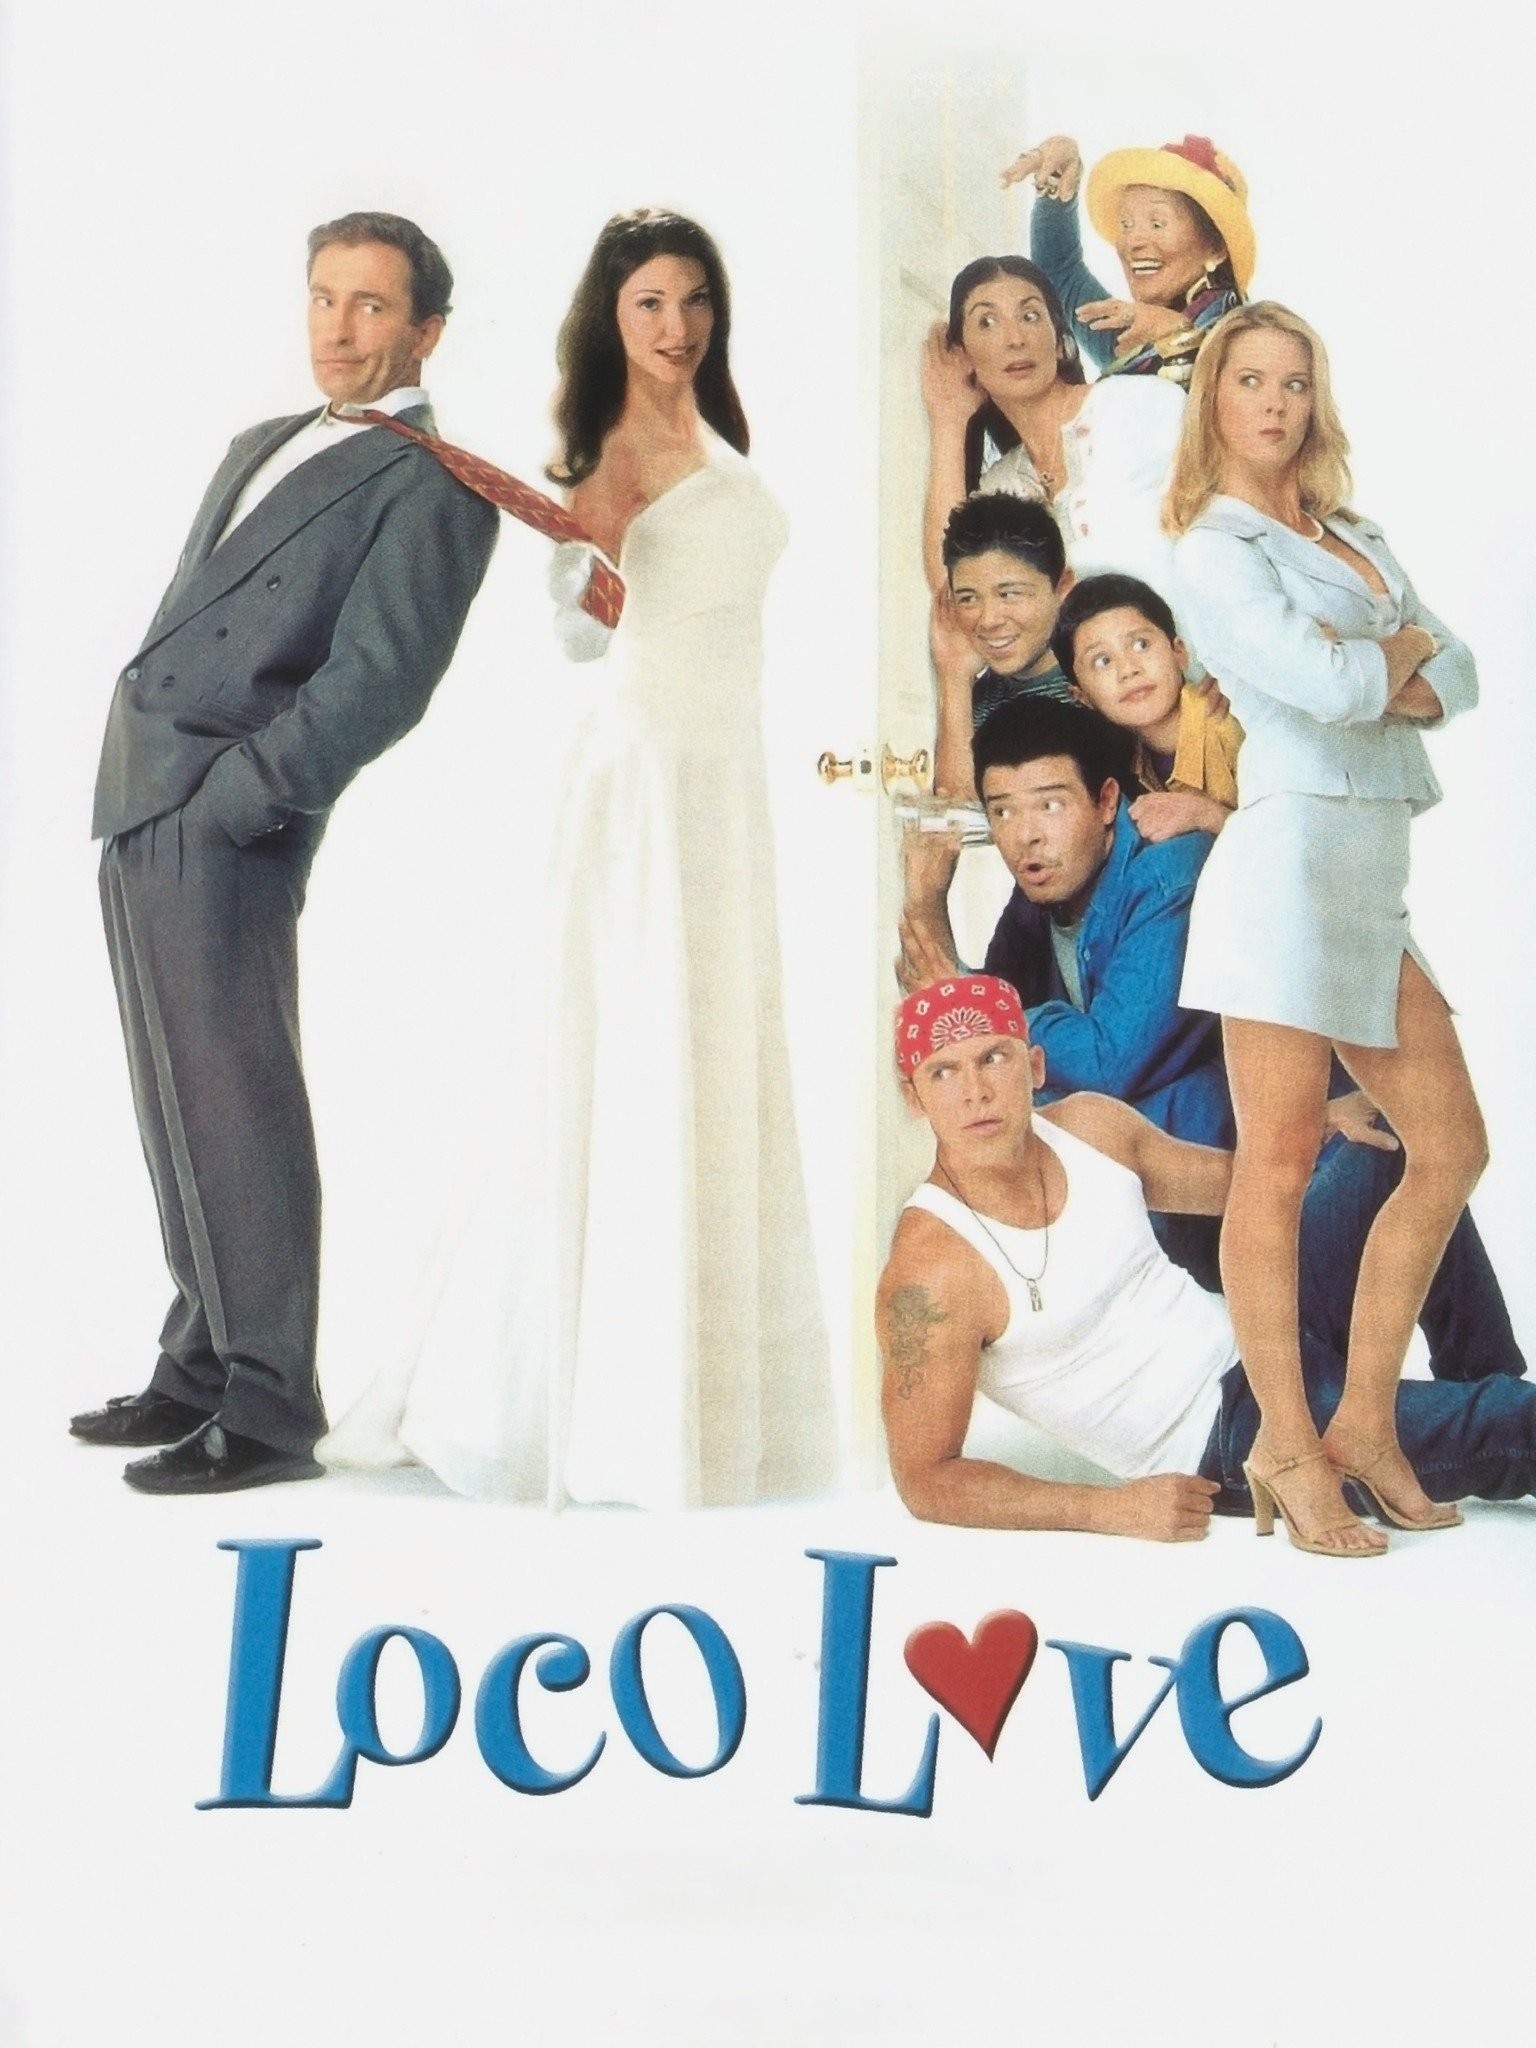 Loco love movie